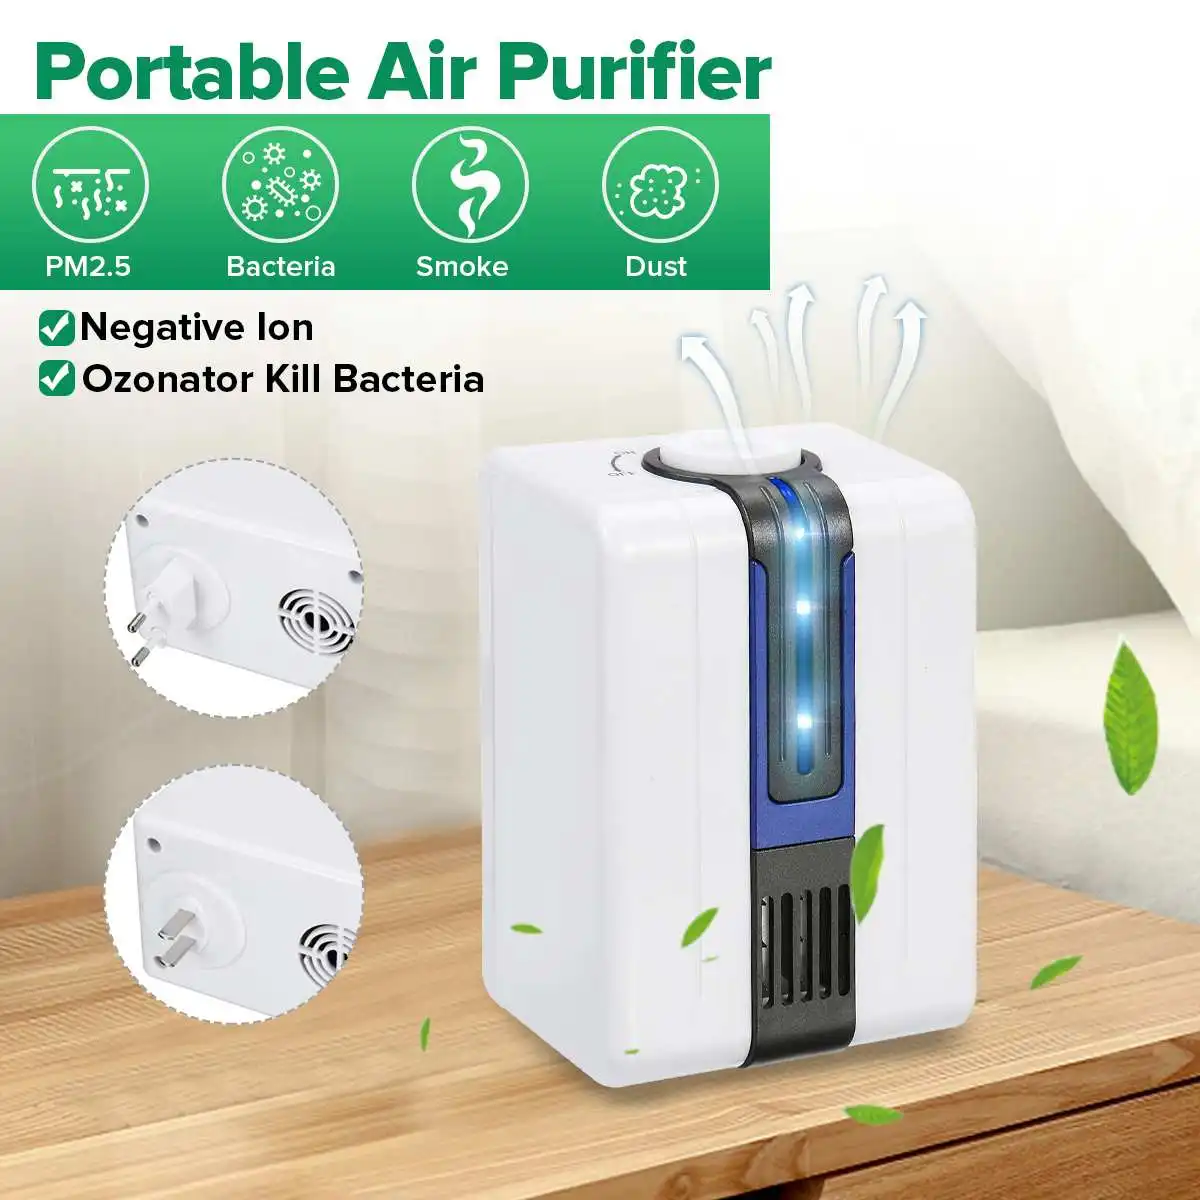 

Negative Ion Air Purifier Air Cleaner Filter Home Ozone Generator Sterilization Odor Dust Bacteria Smoke Pm2.5 Eliminator